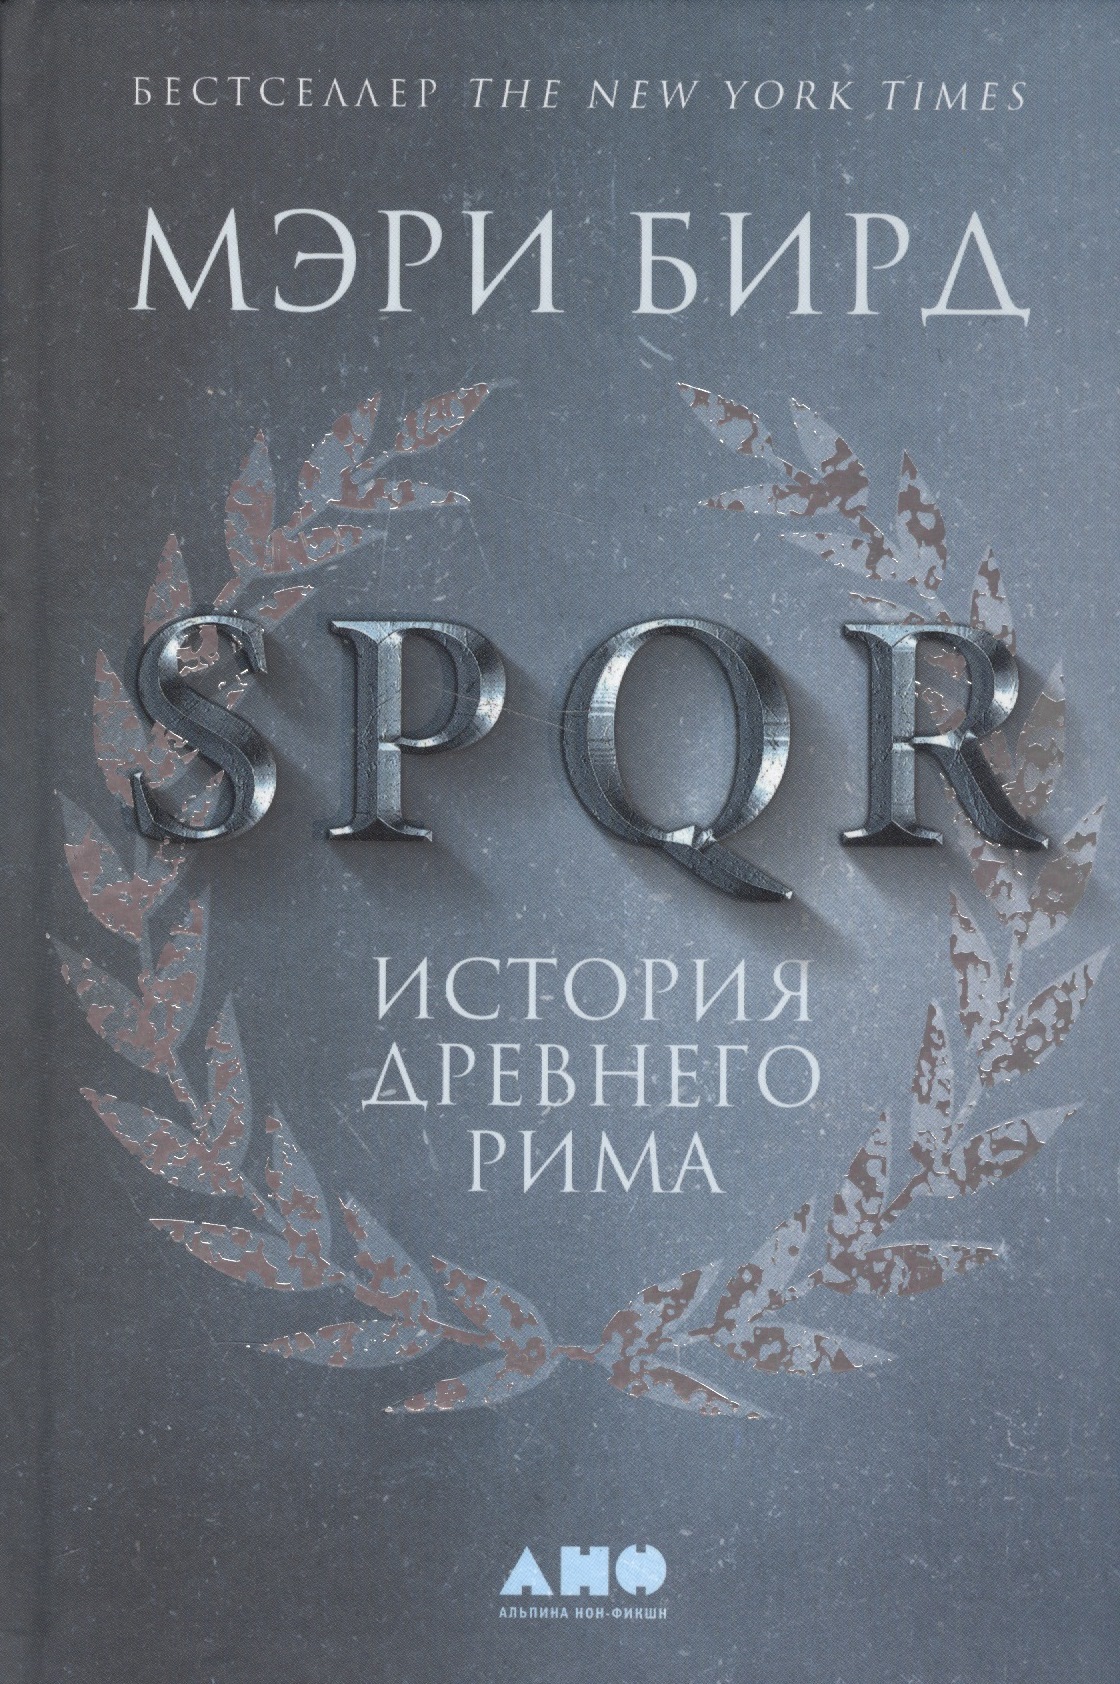 SPQR: История Древнего Рима